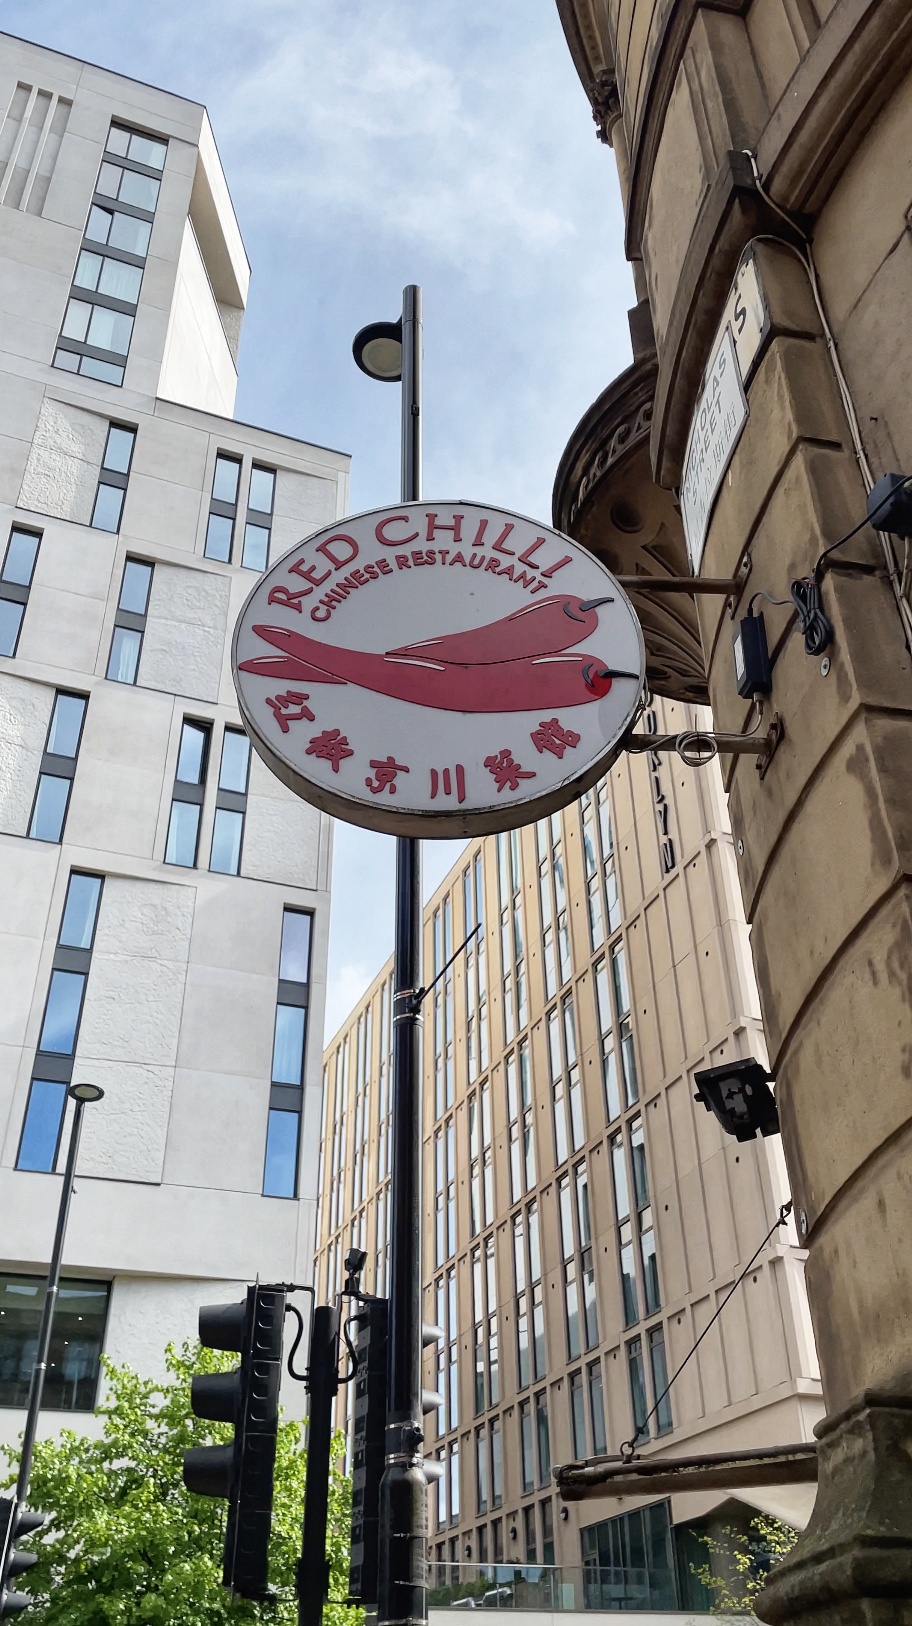 Red Chilli restaurant in Manchester